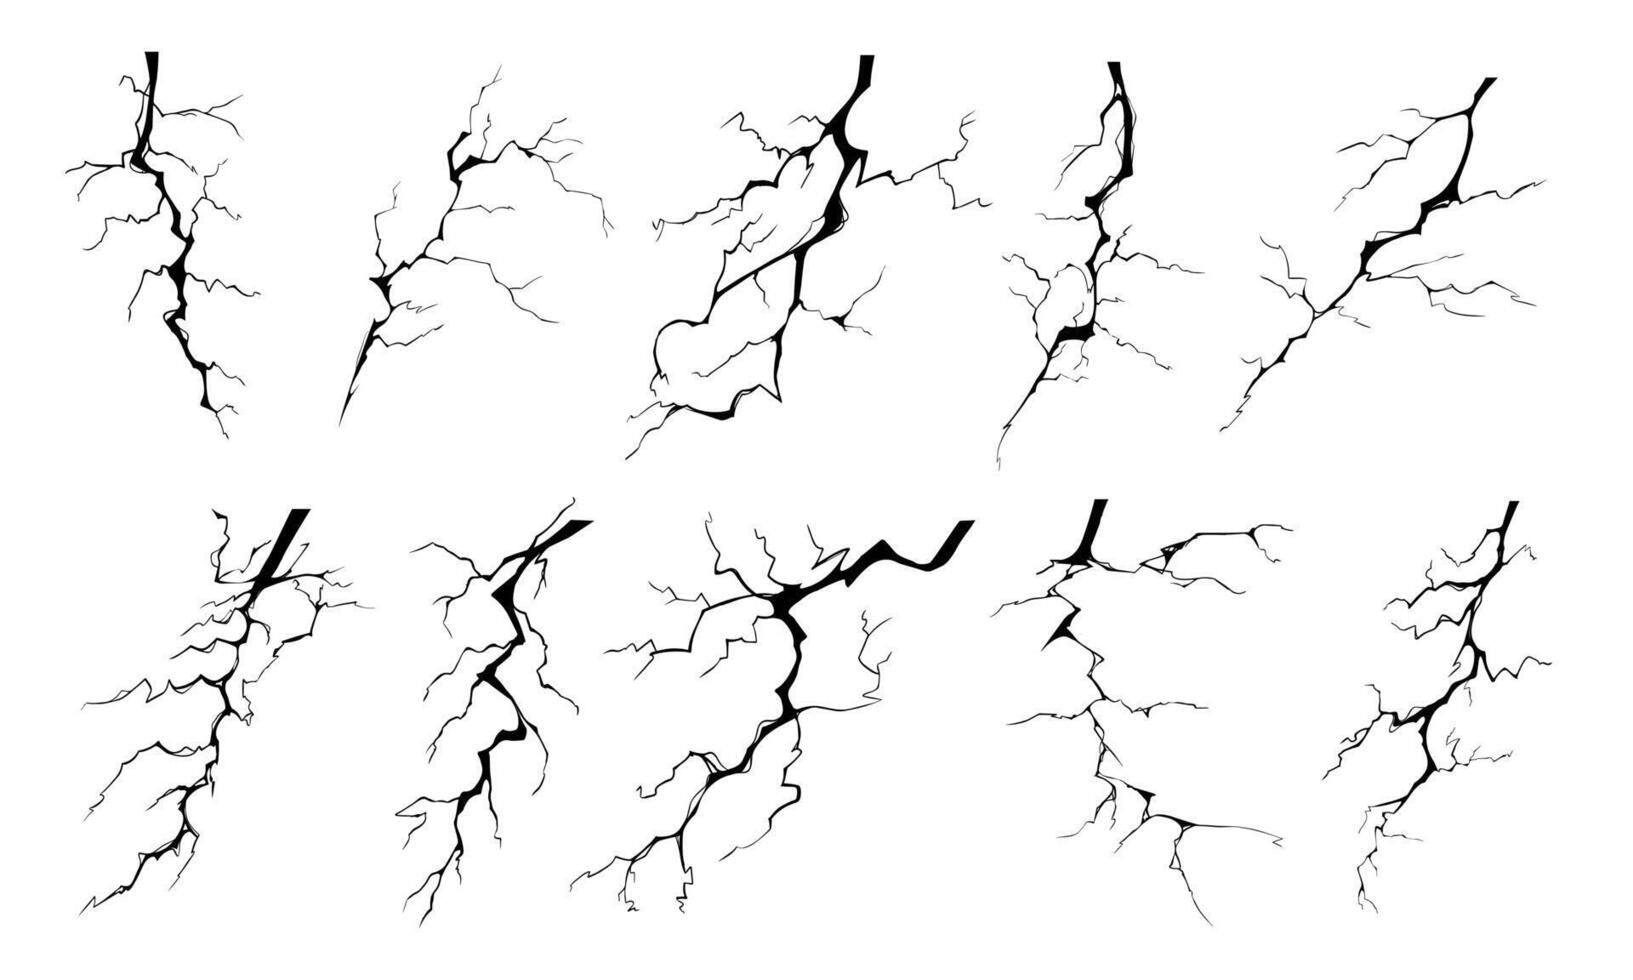 Lightning strike bolt silhouettes vector illustration set.